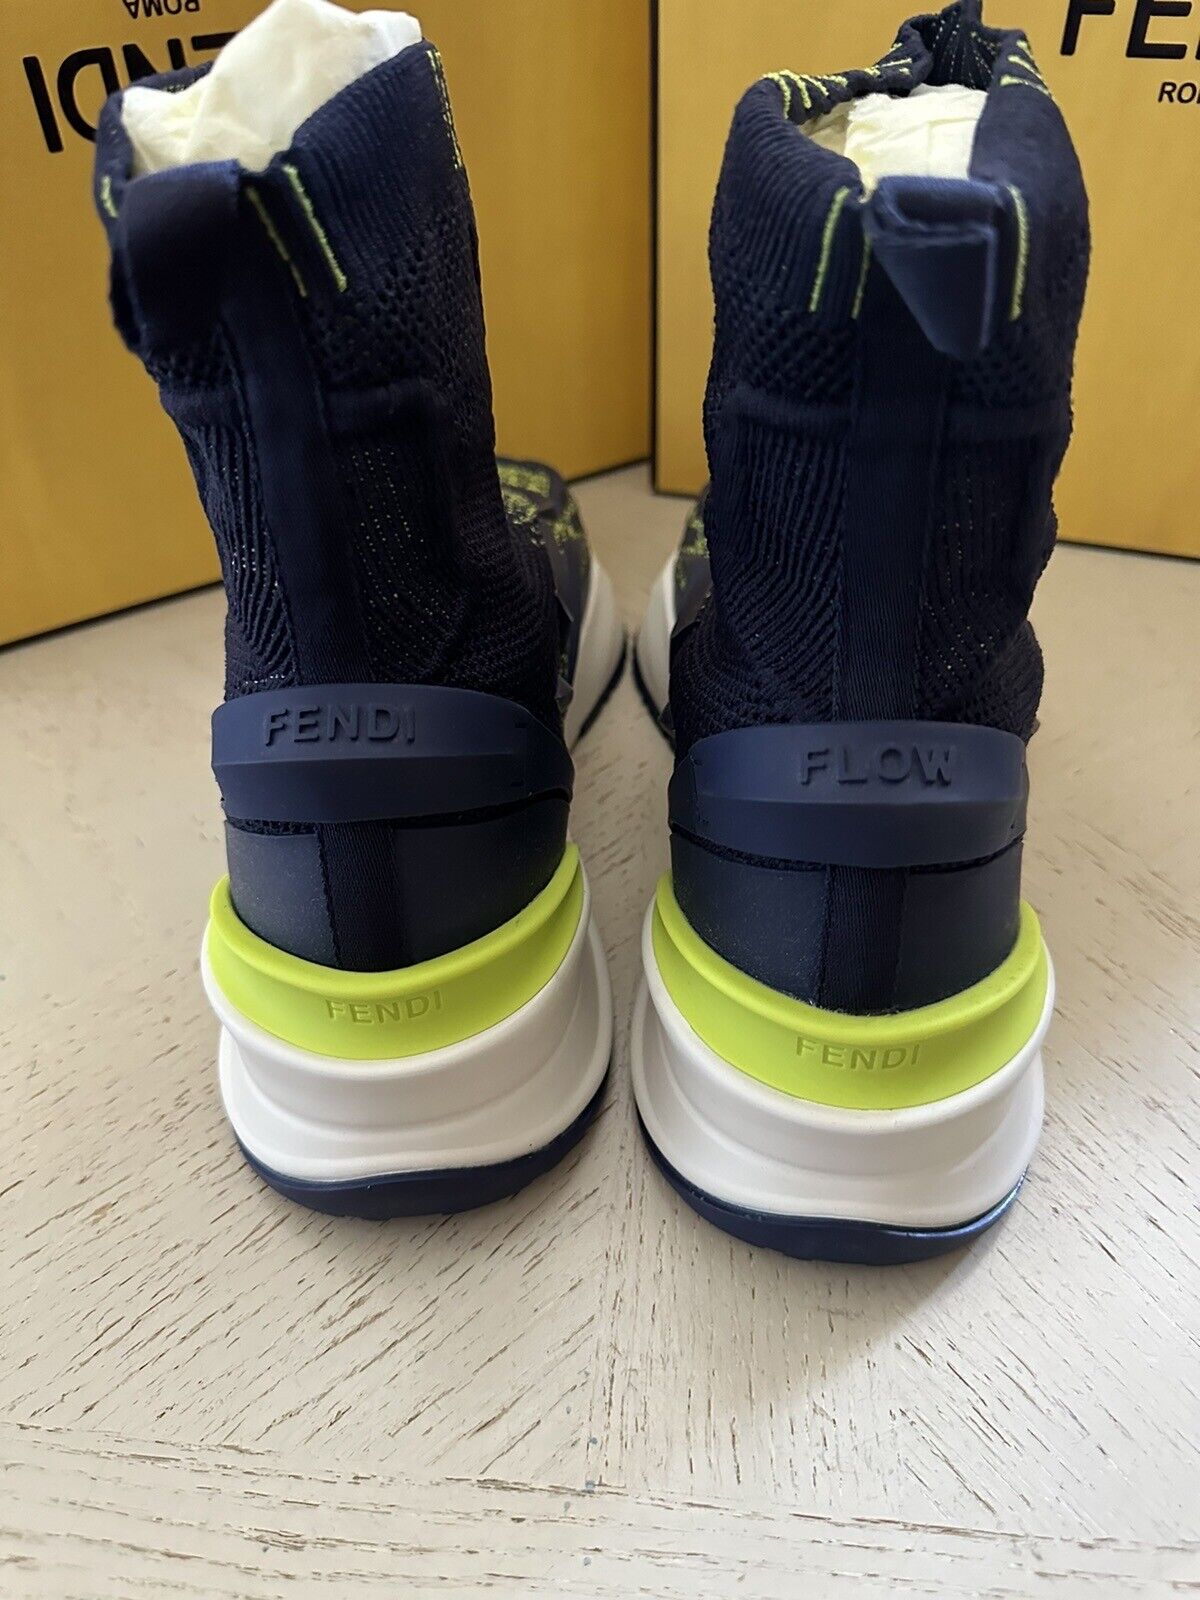 NIB $ 1190 Fendi Contrast Knit High Top Sneakers Schuhe Marine/Grün 12 US/11 UK